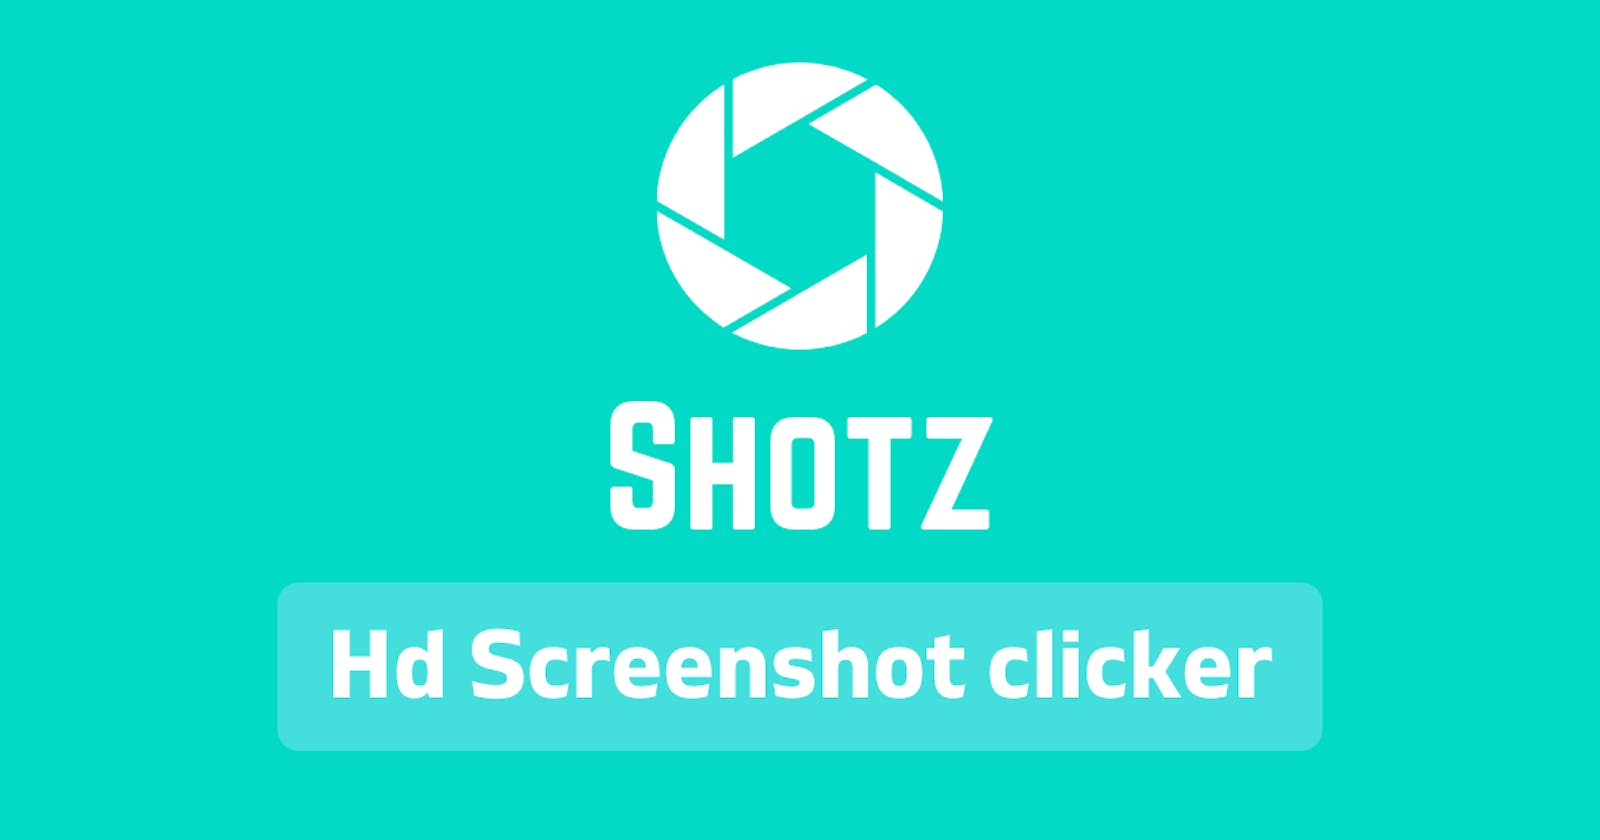 Introducing Shotz - A High-Quality Screen Clicker